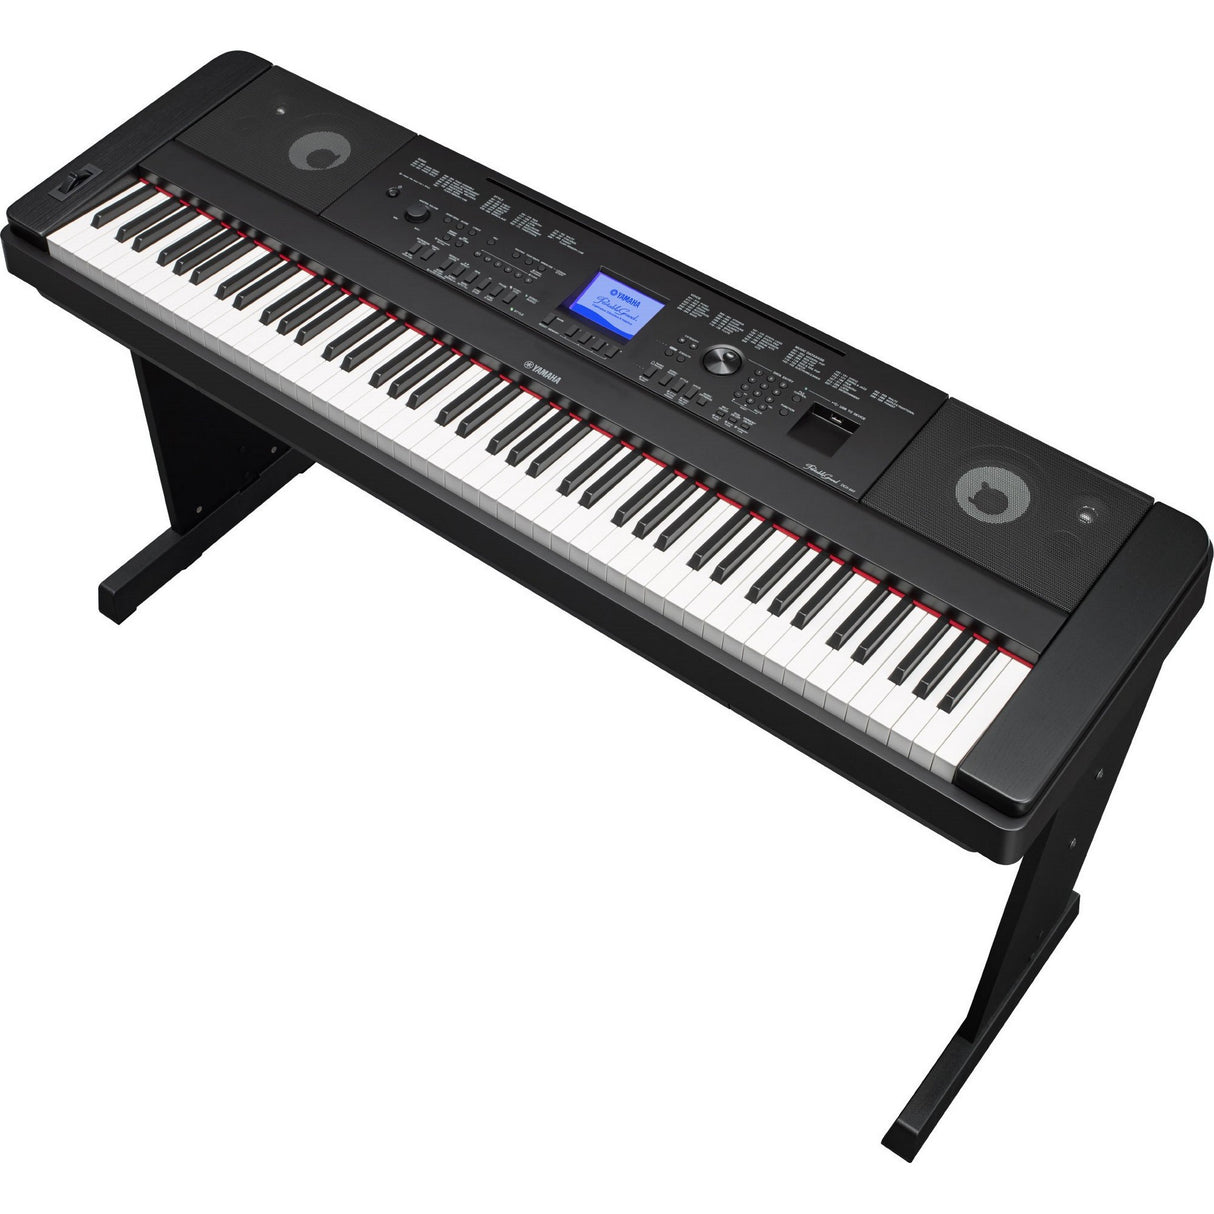 Yamaha DGX-660 88-Note GHS Digital Piano, Black